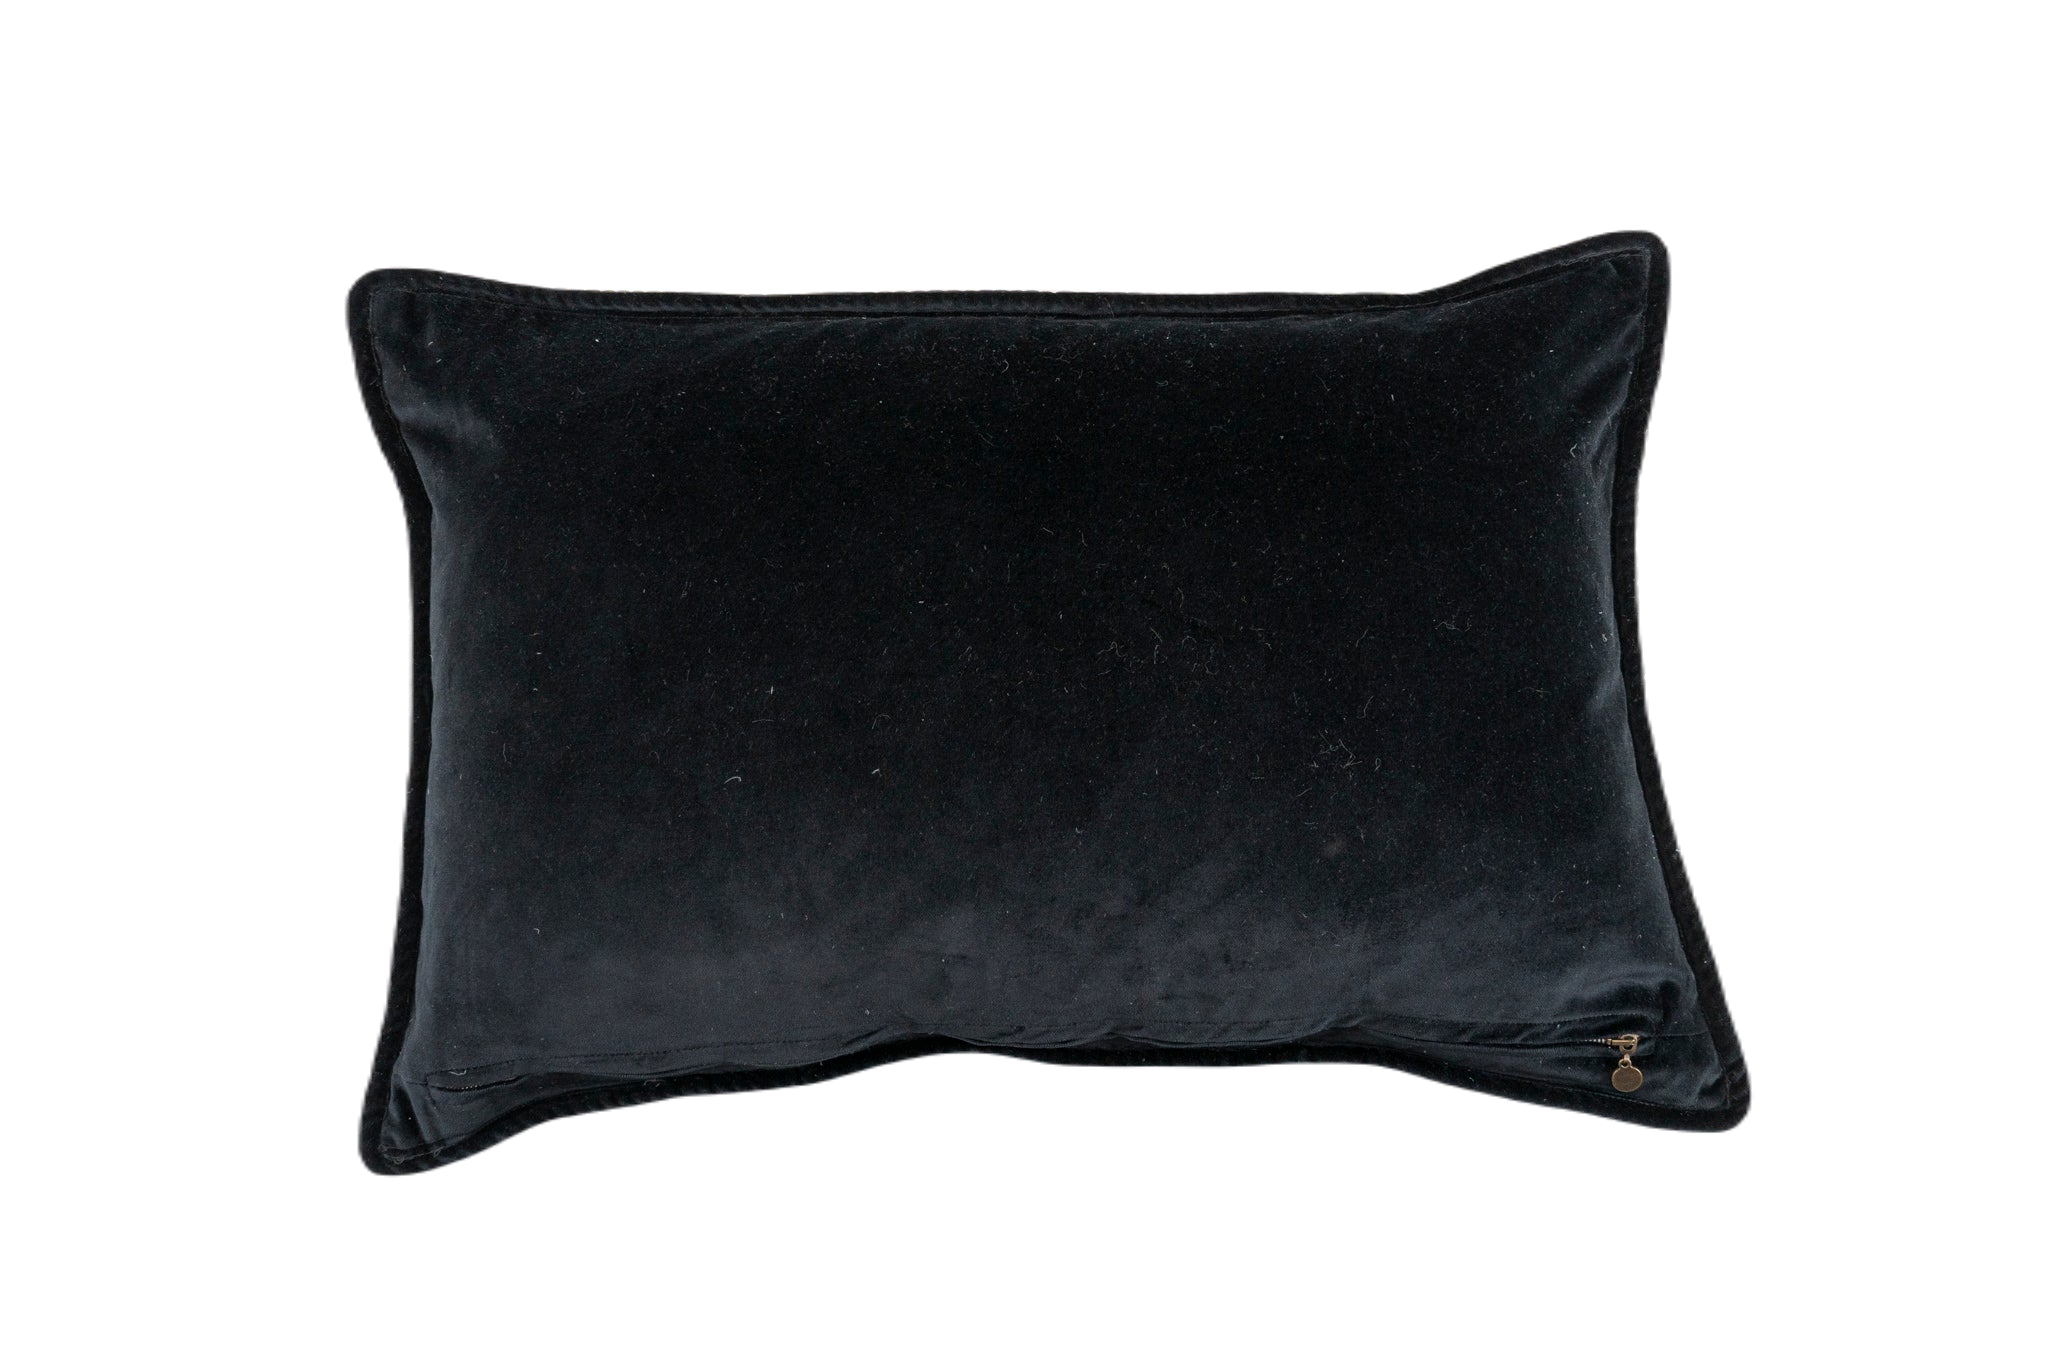 Pillow: Artifact textile, handwoven in Romania - P252